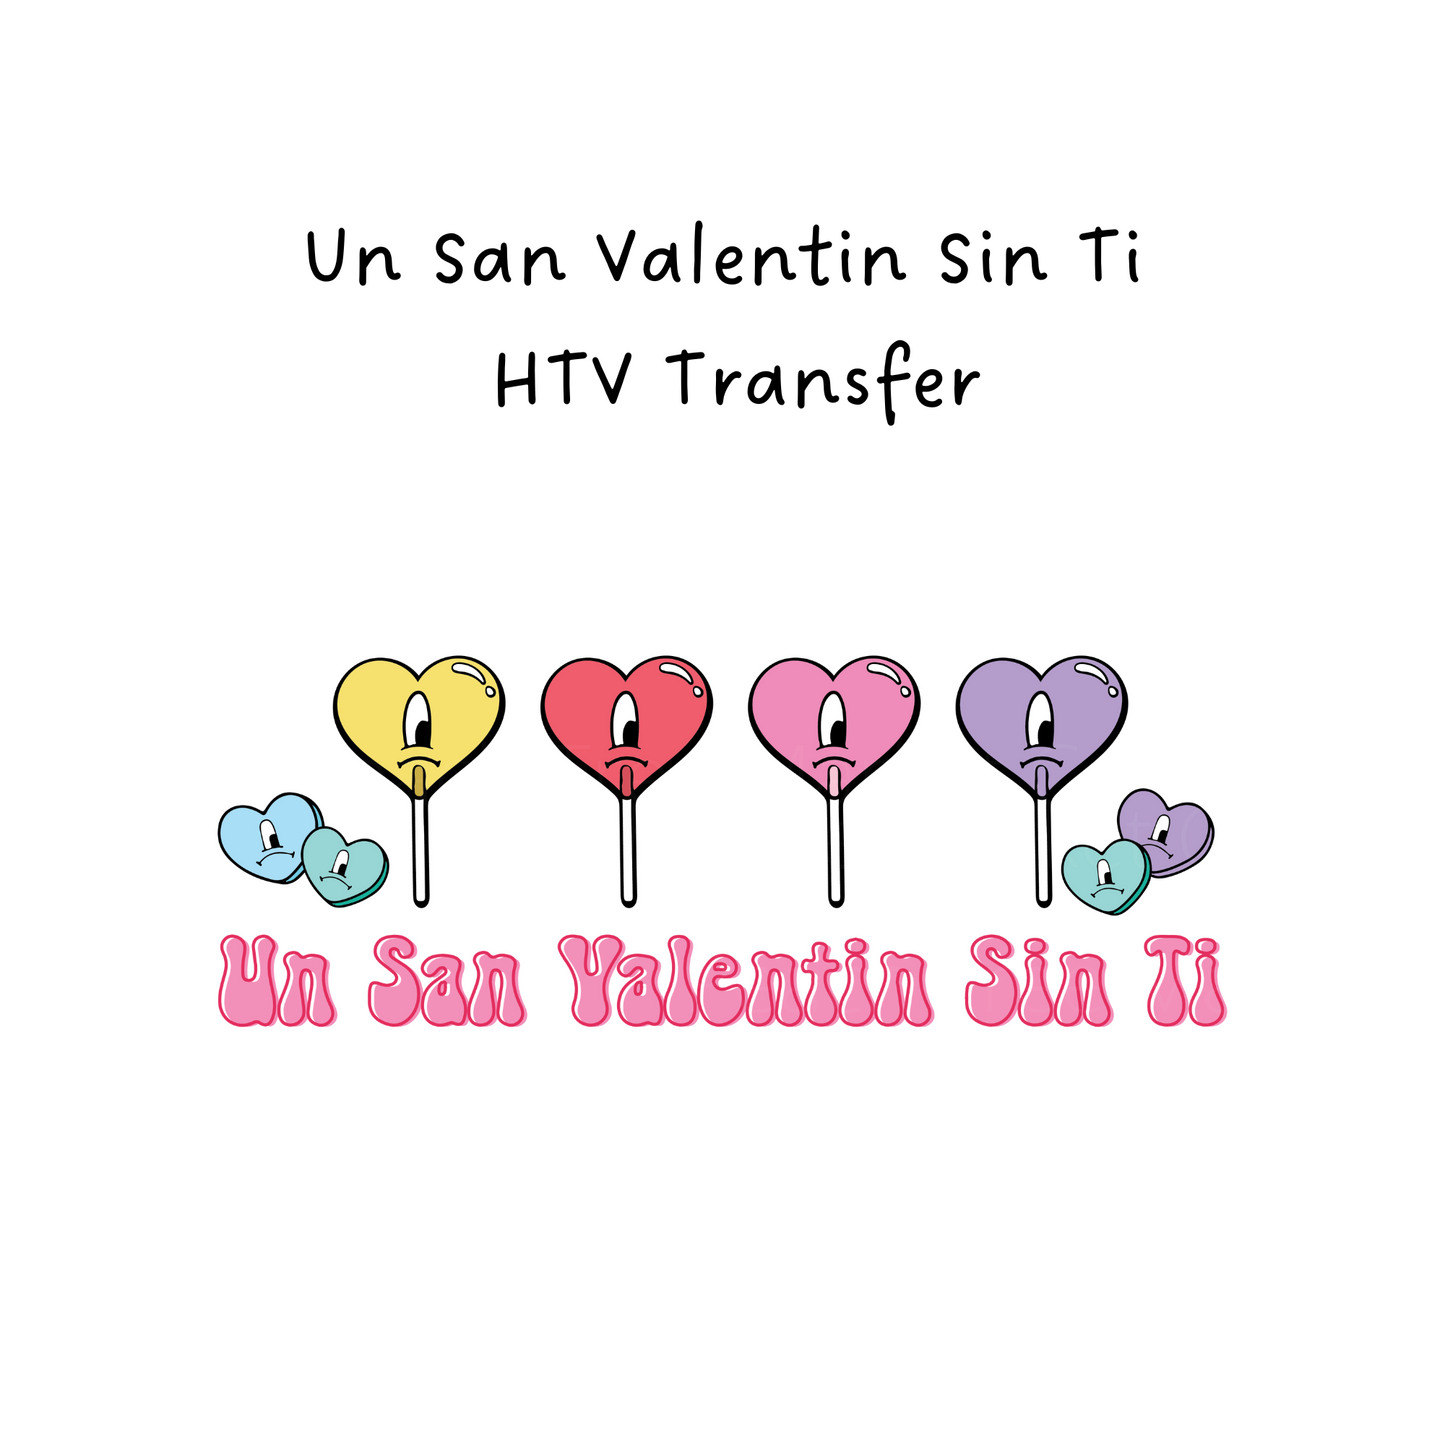 Un San Valentin Sin Ti HTV Transfer